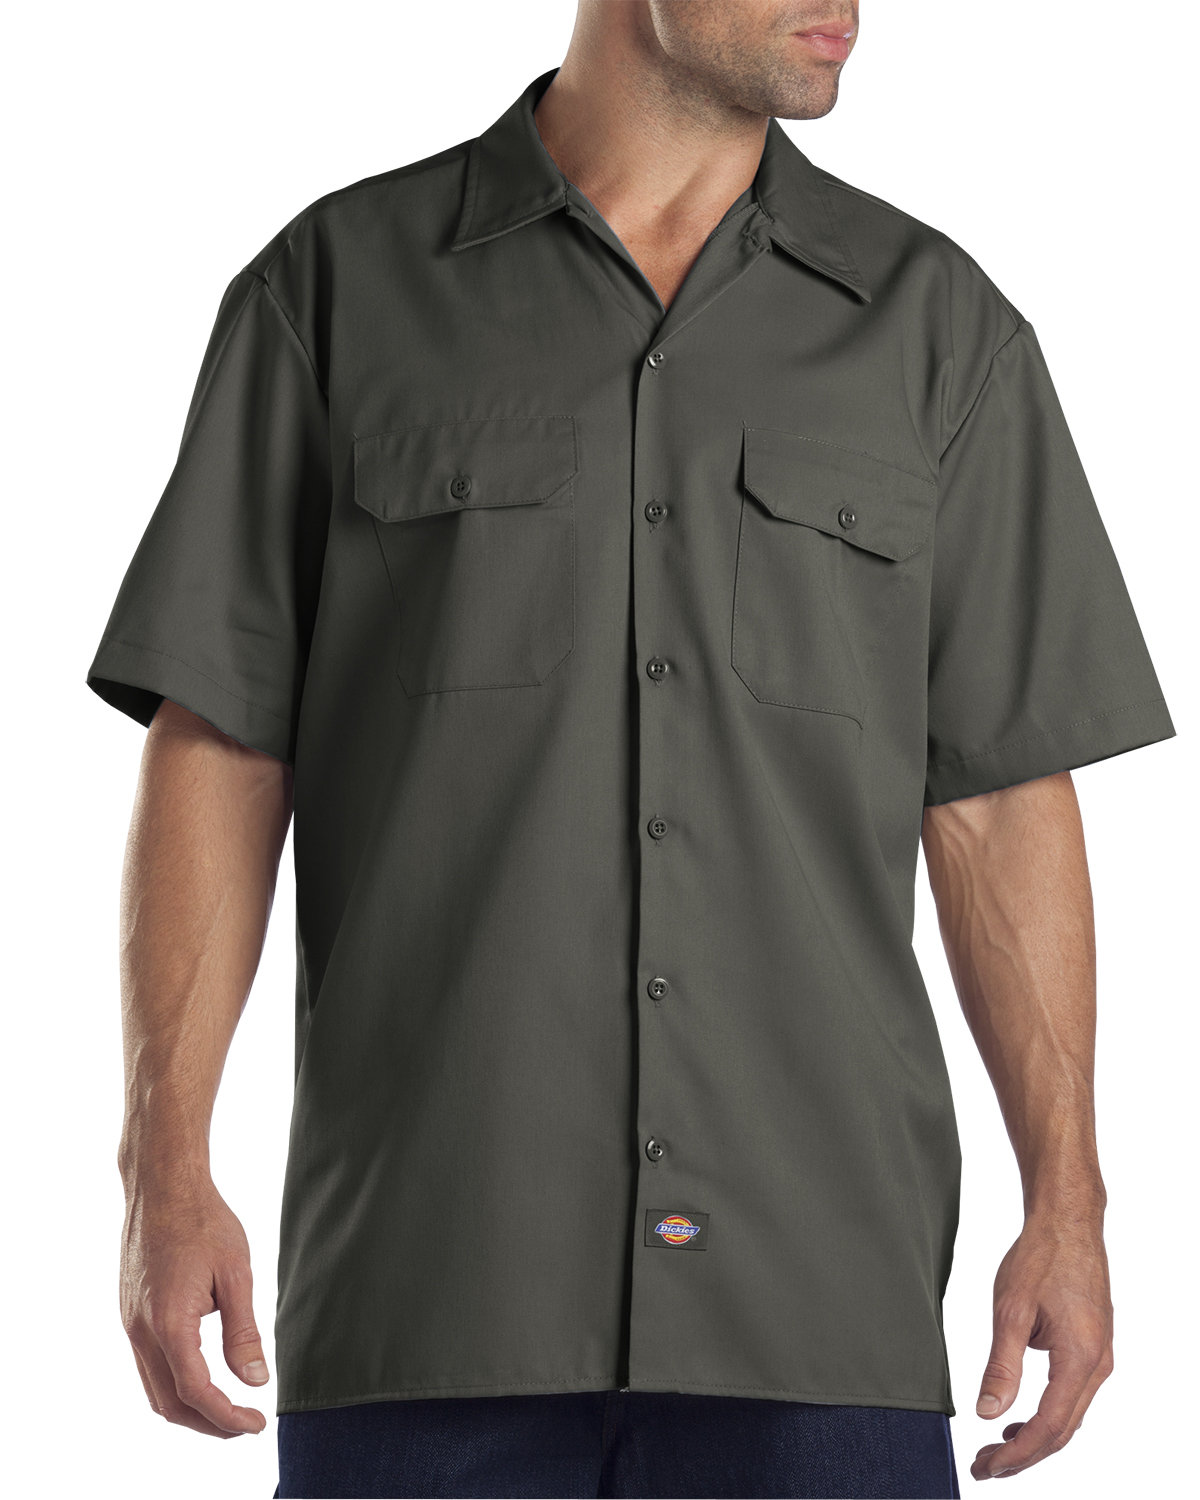 Dickies Unisex Short-Sleeve Work Shirt olive green 